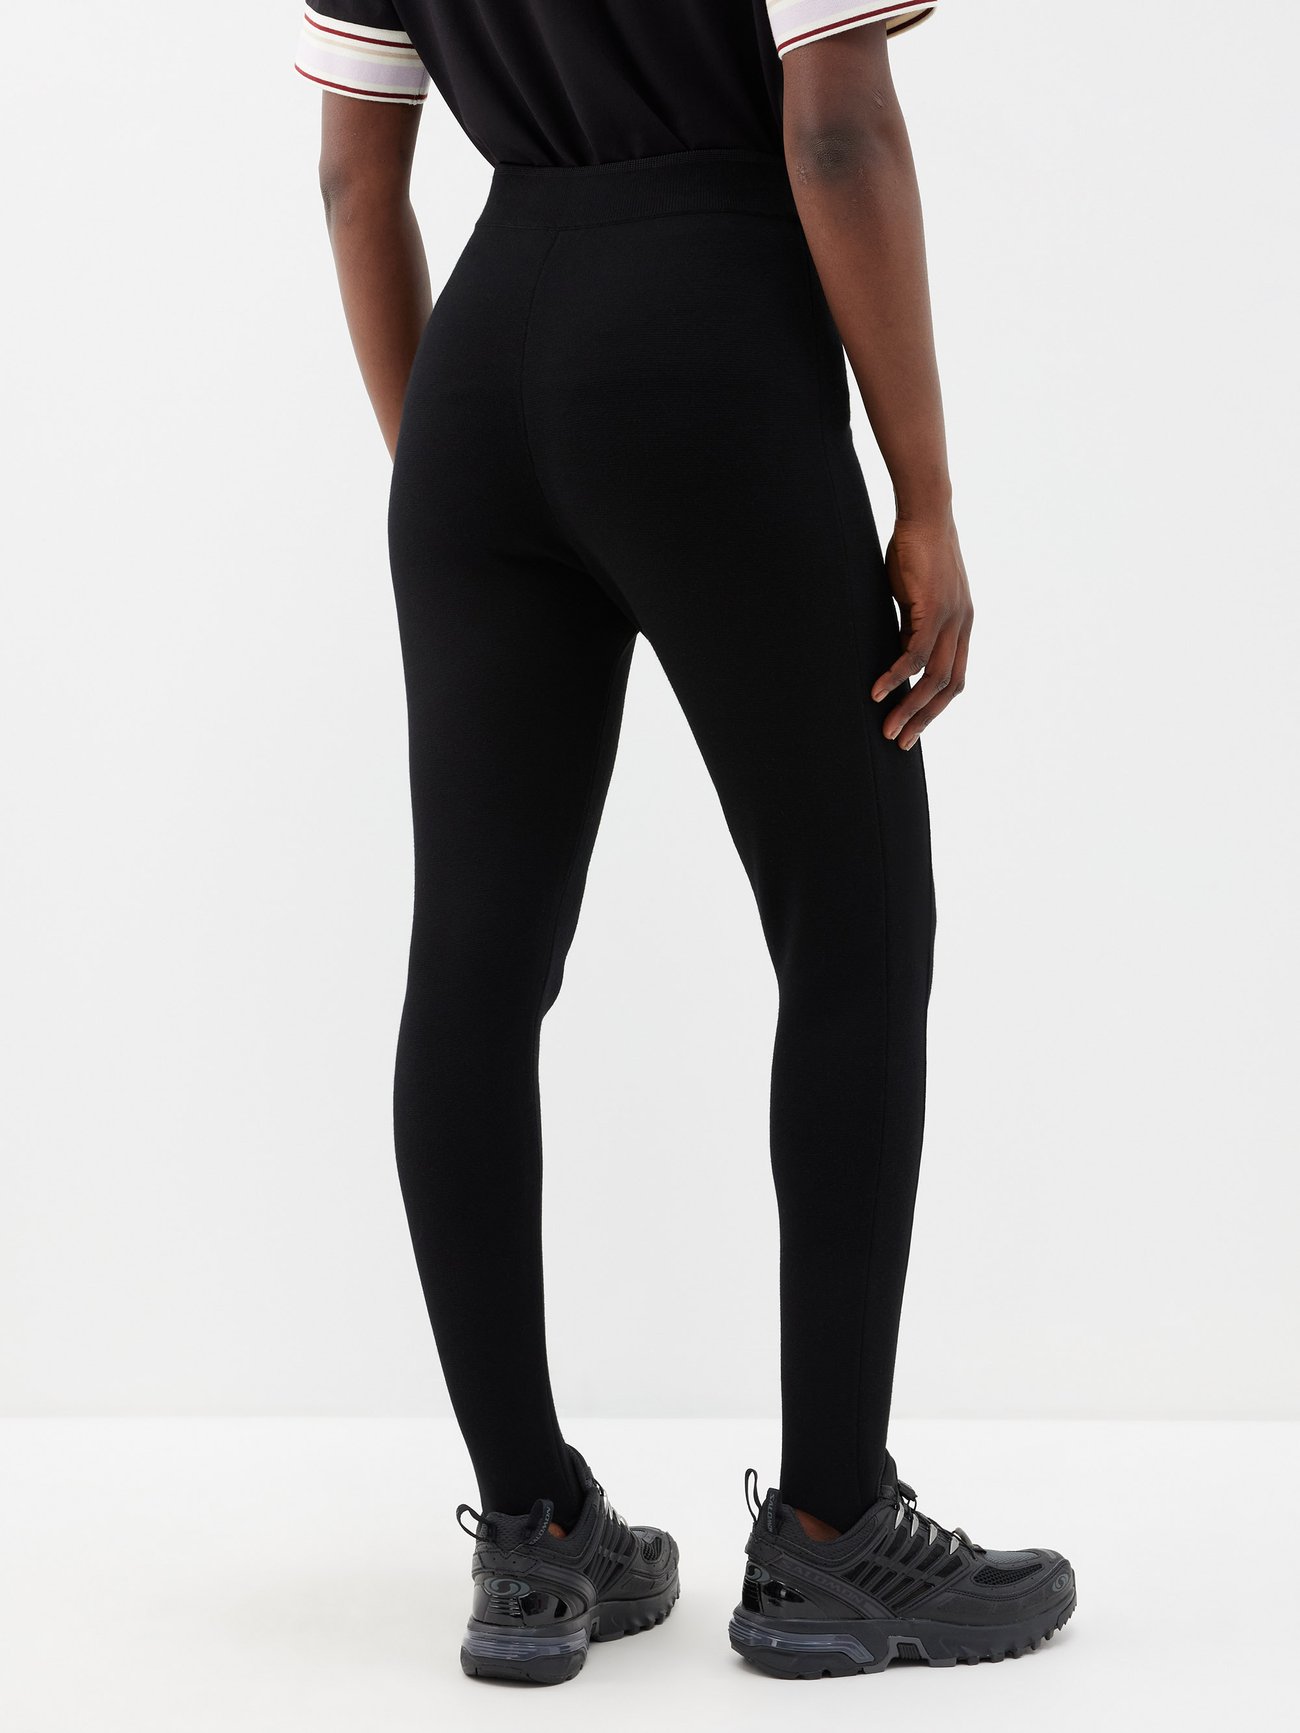 Champion Activewear | Rochester Addict Leggings Black - Womens ⋆  Drzubedatumbi